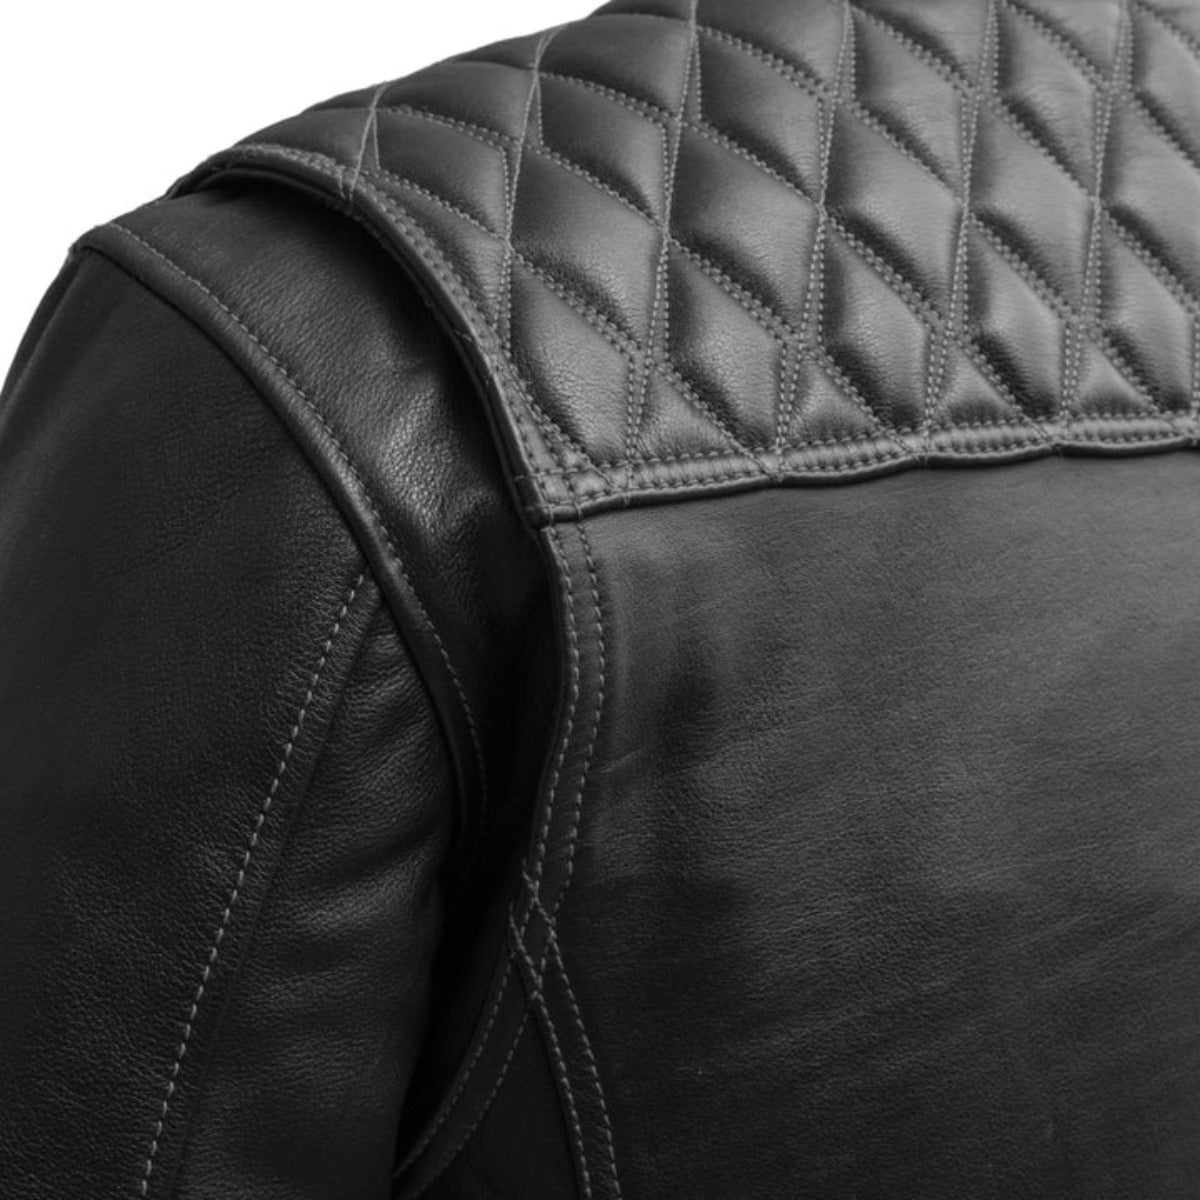 First Manufacturing Cinder - Men's Cafe Style Leather Jacket, Black/Grey